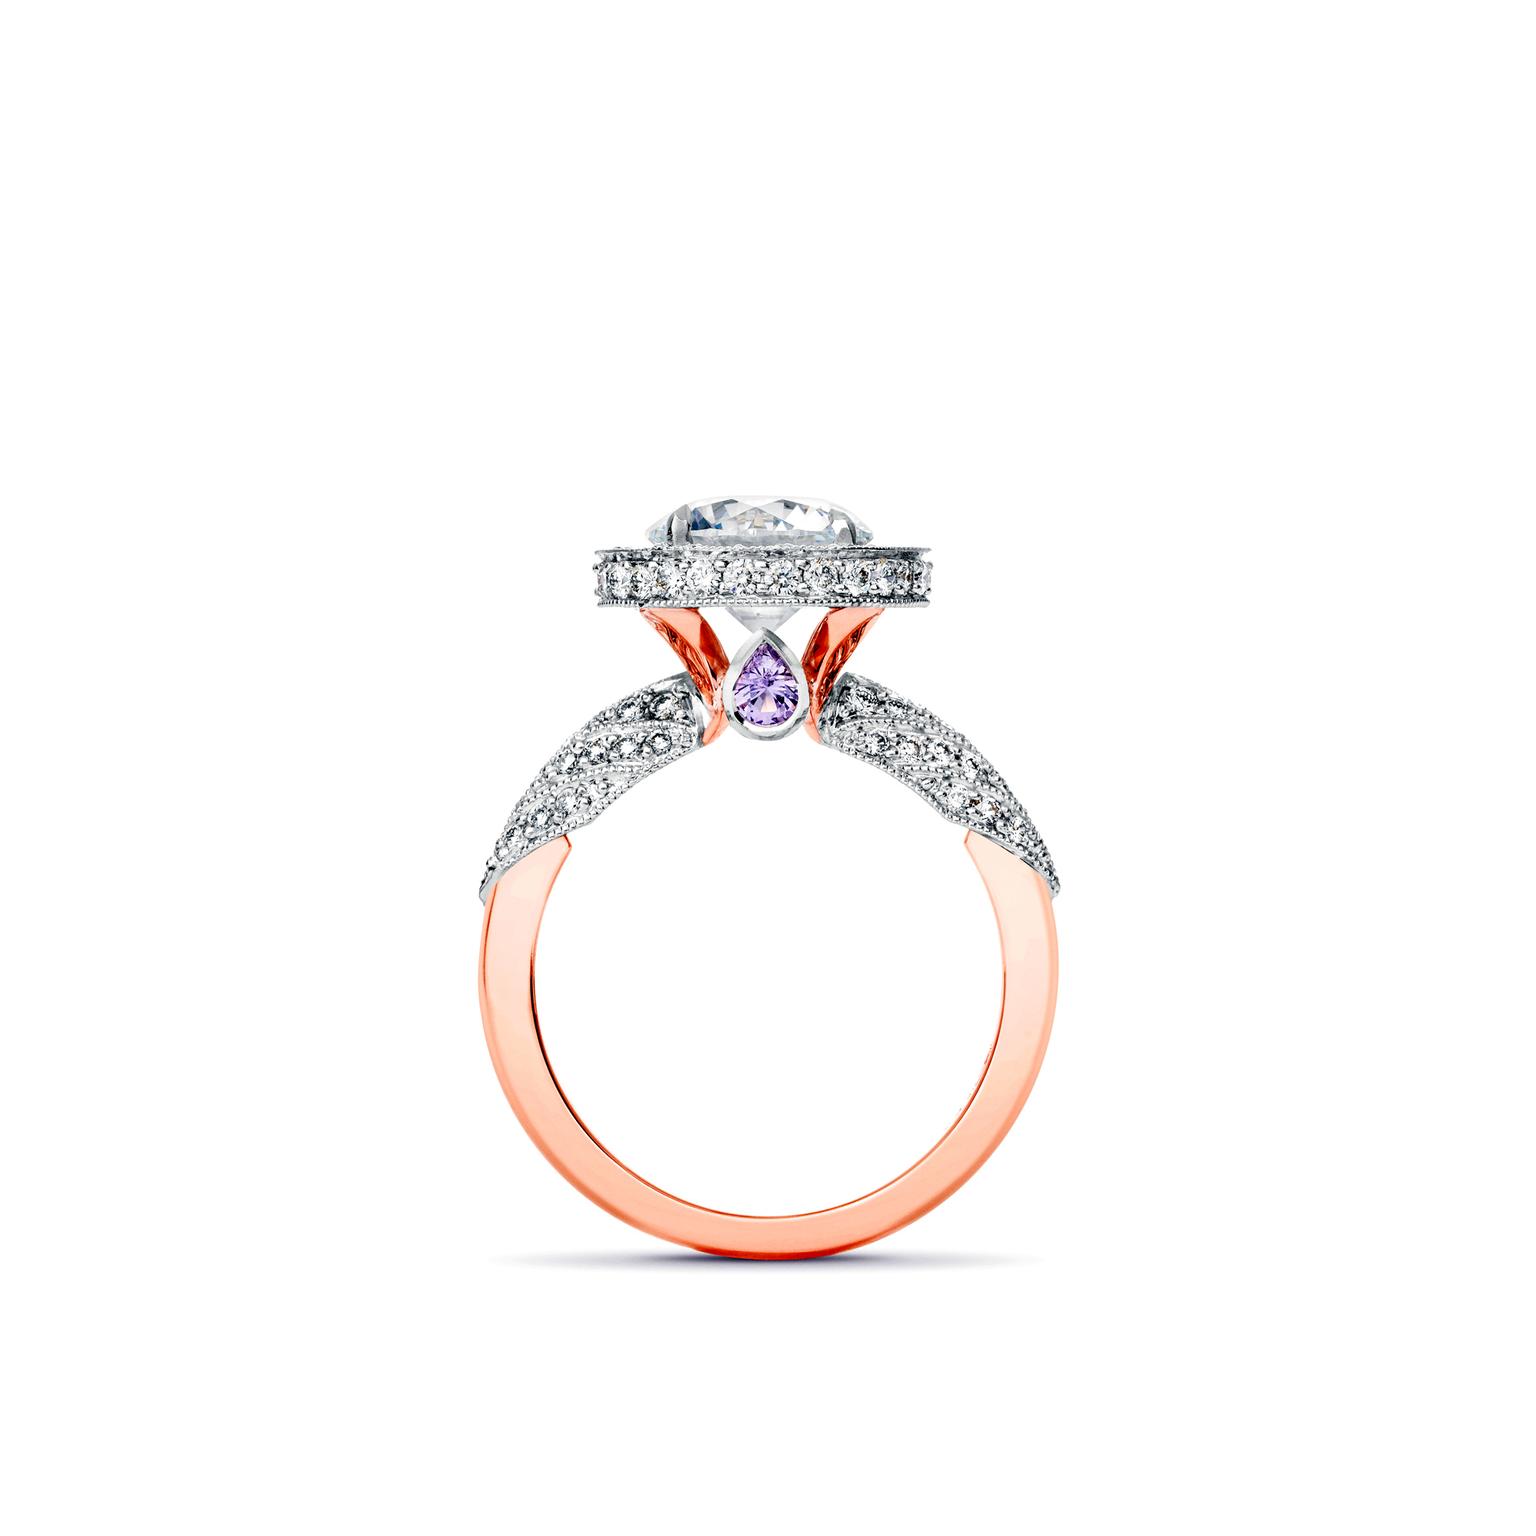 Fairfax & Roberts custom-made engagement ring